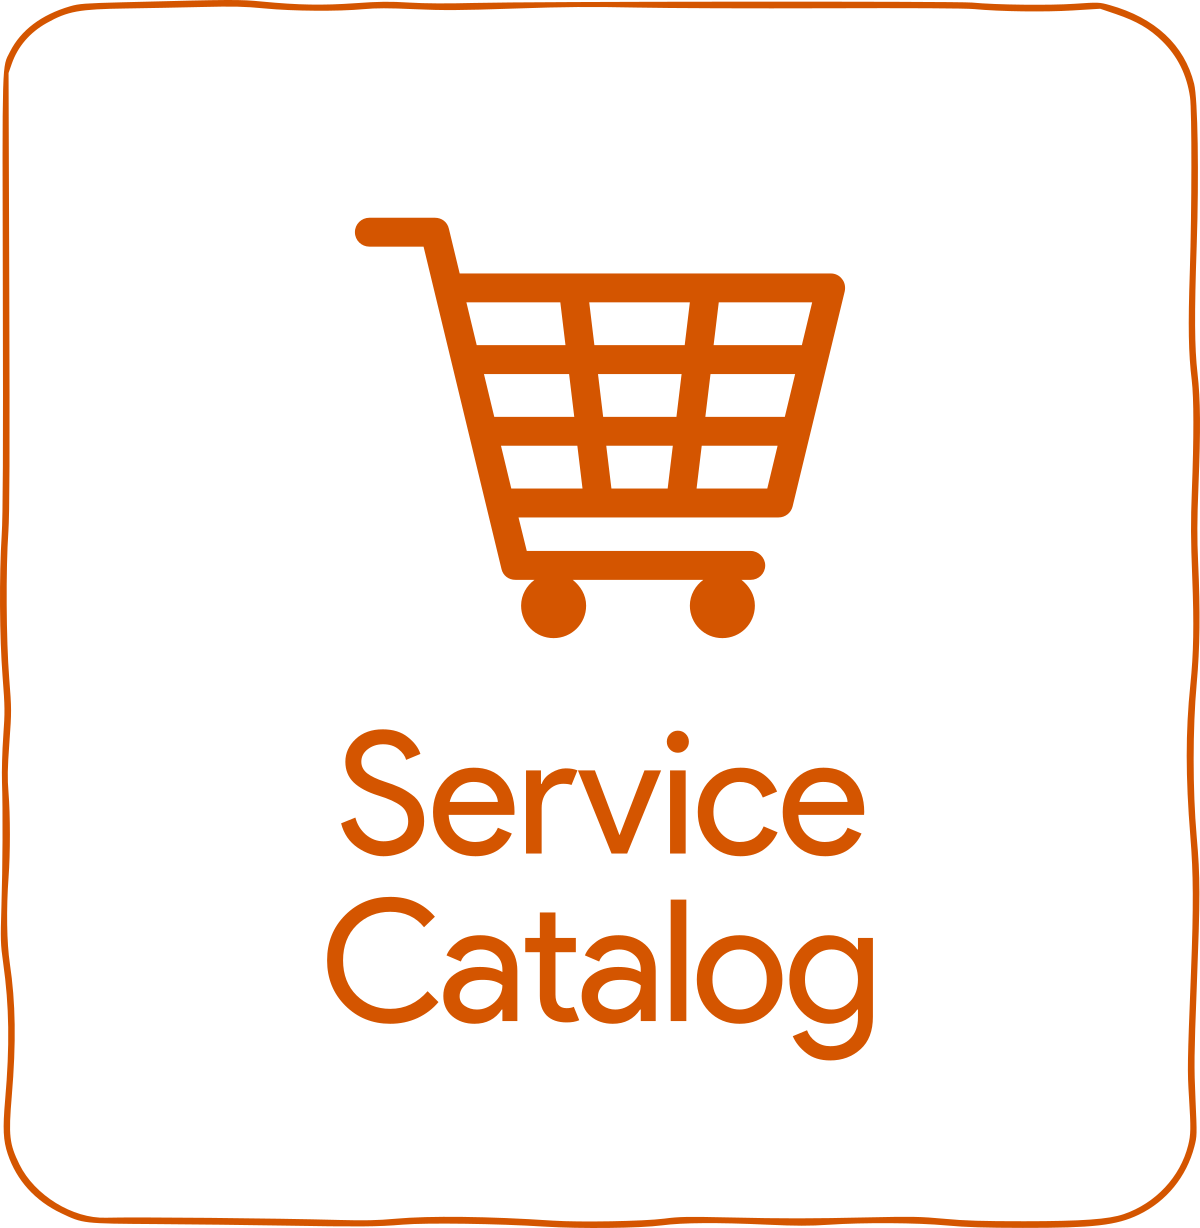 Service Catalog